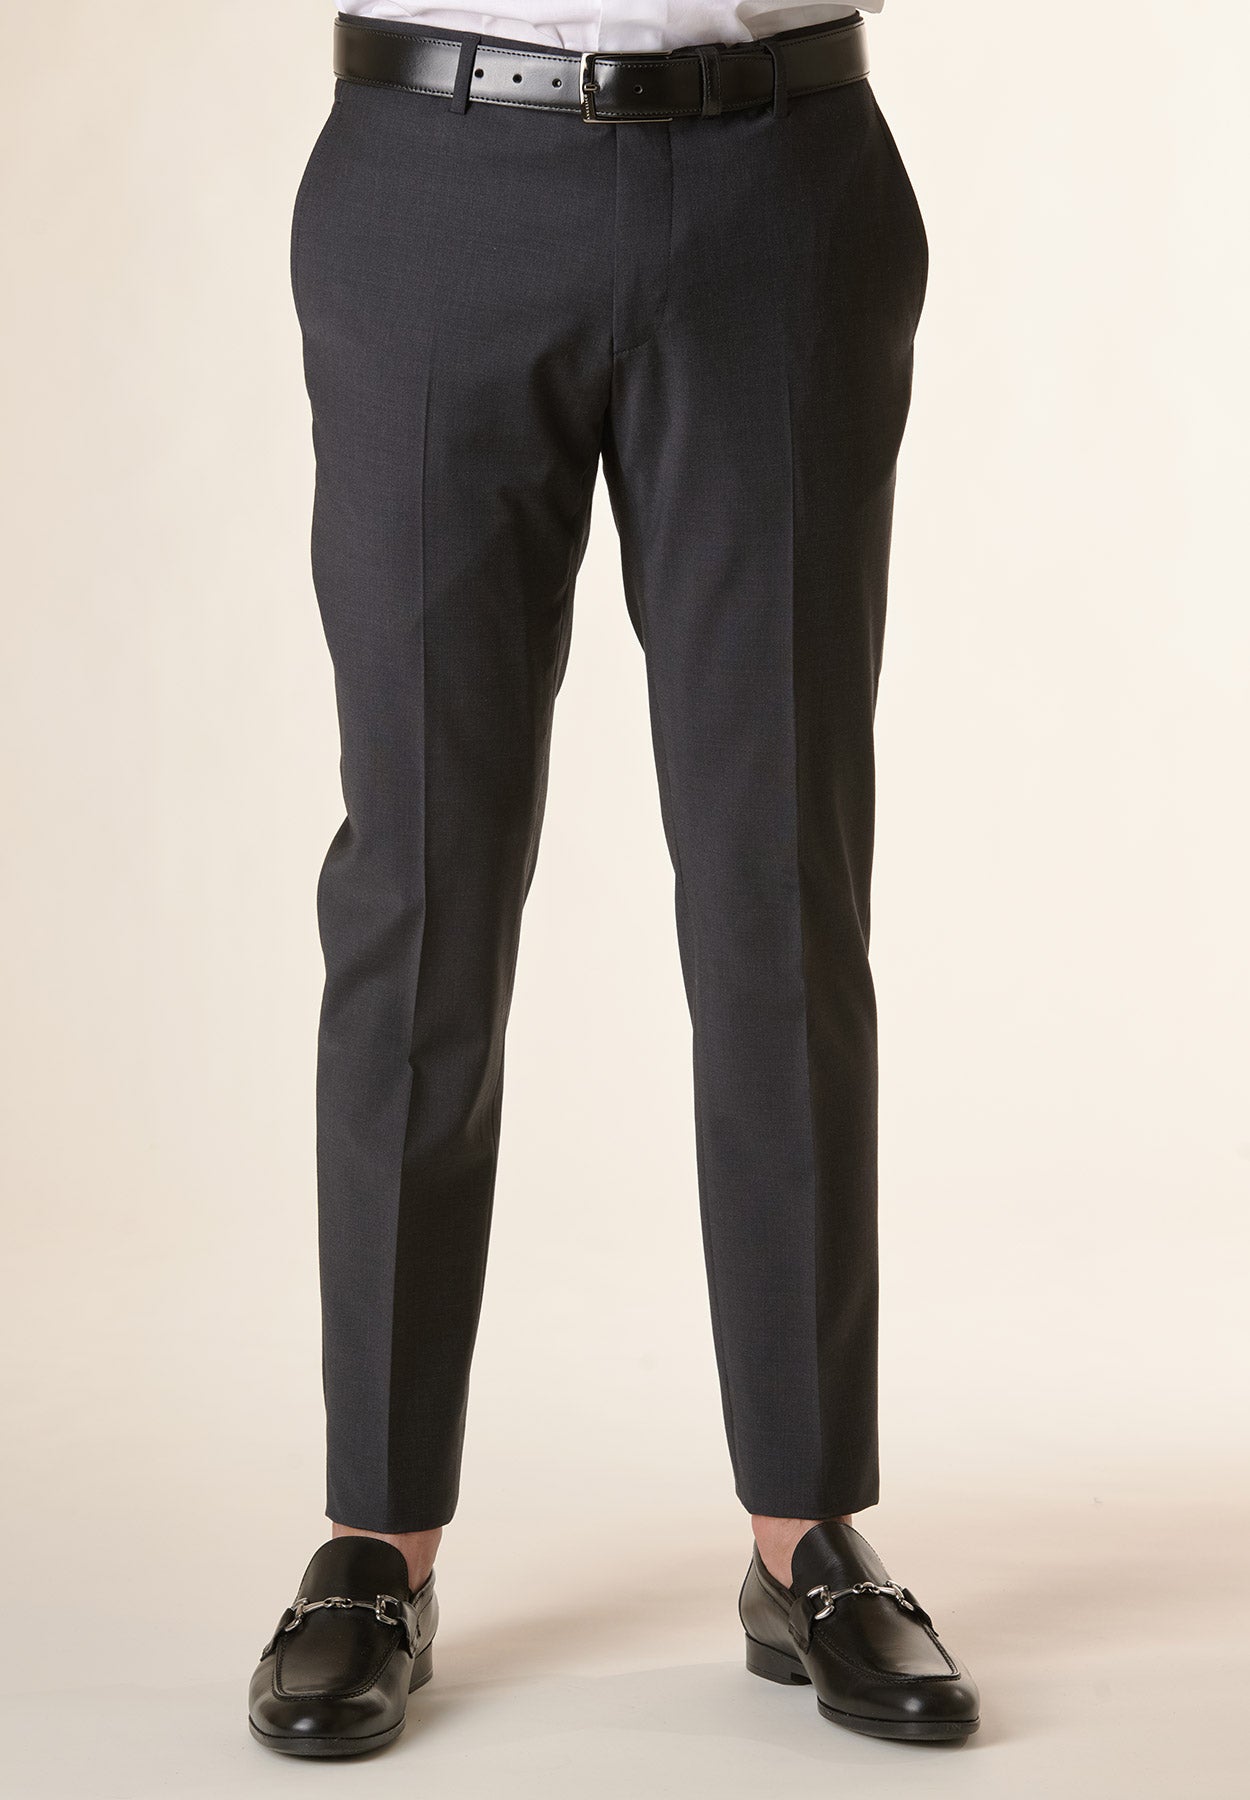 Pantalone antracite tela lana stretch custom fit